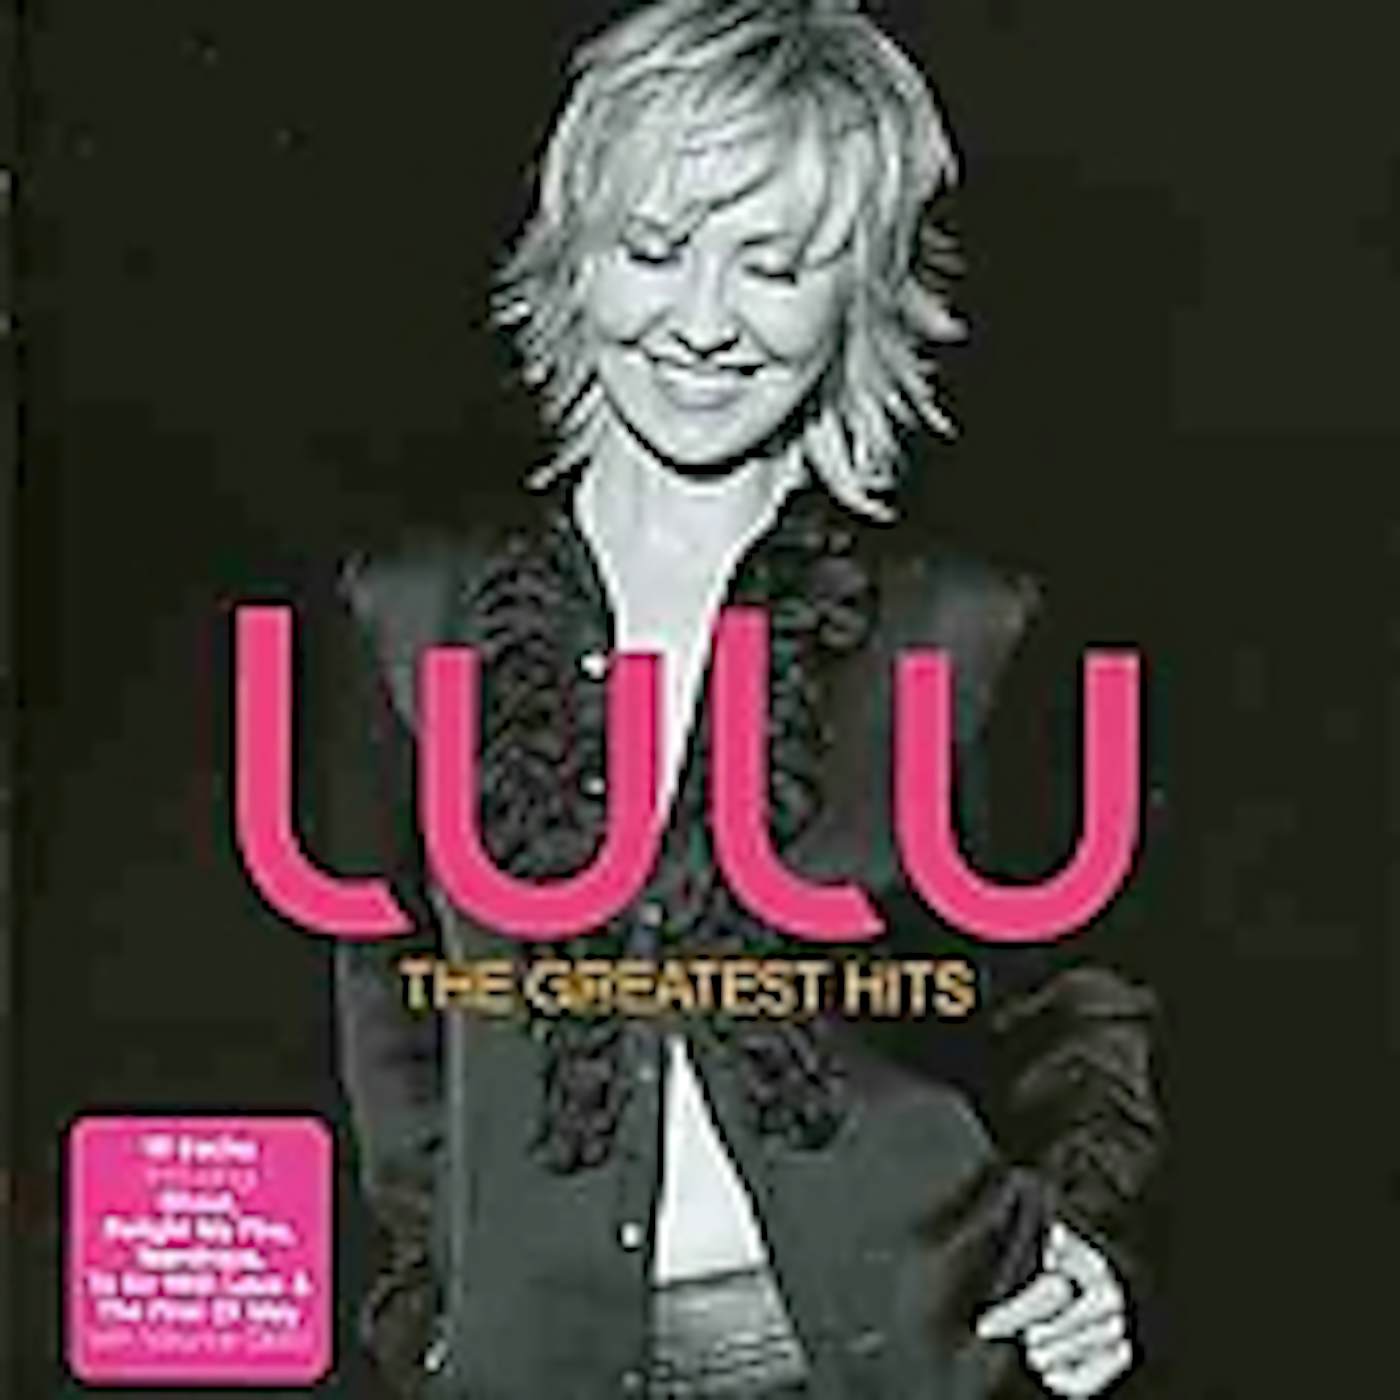 Lulu GREATEST HITS CD